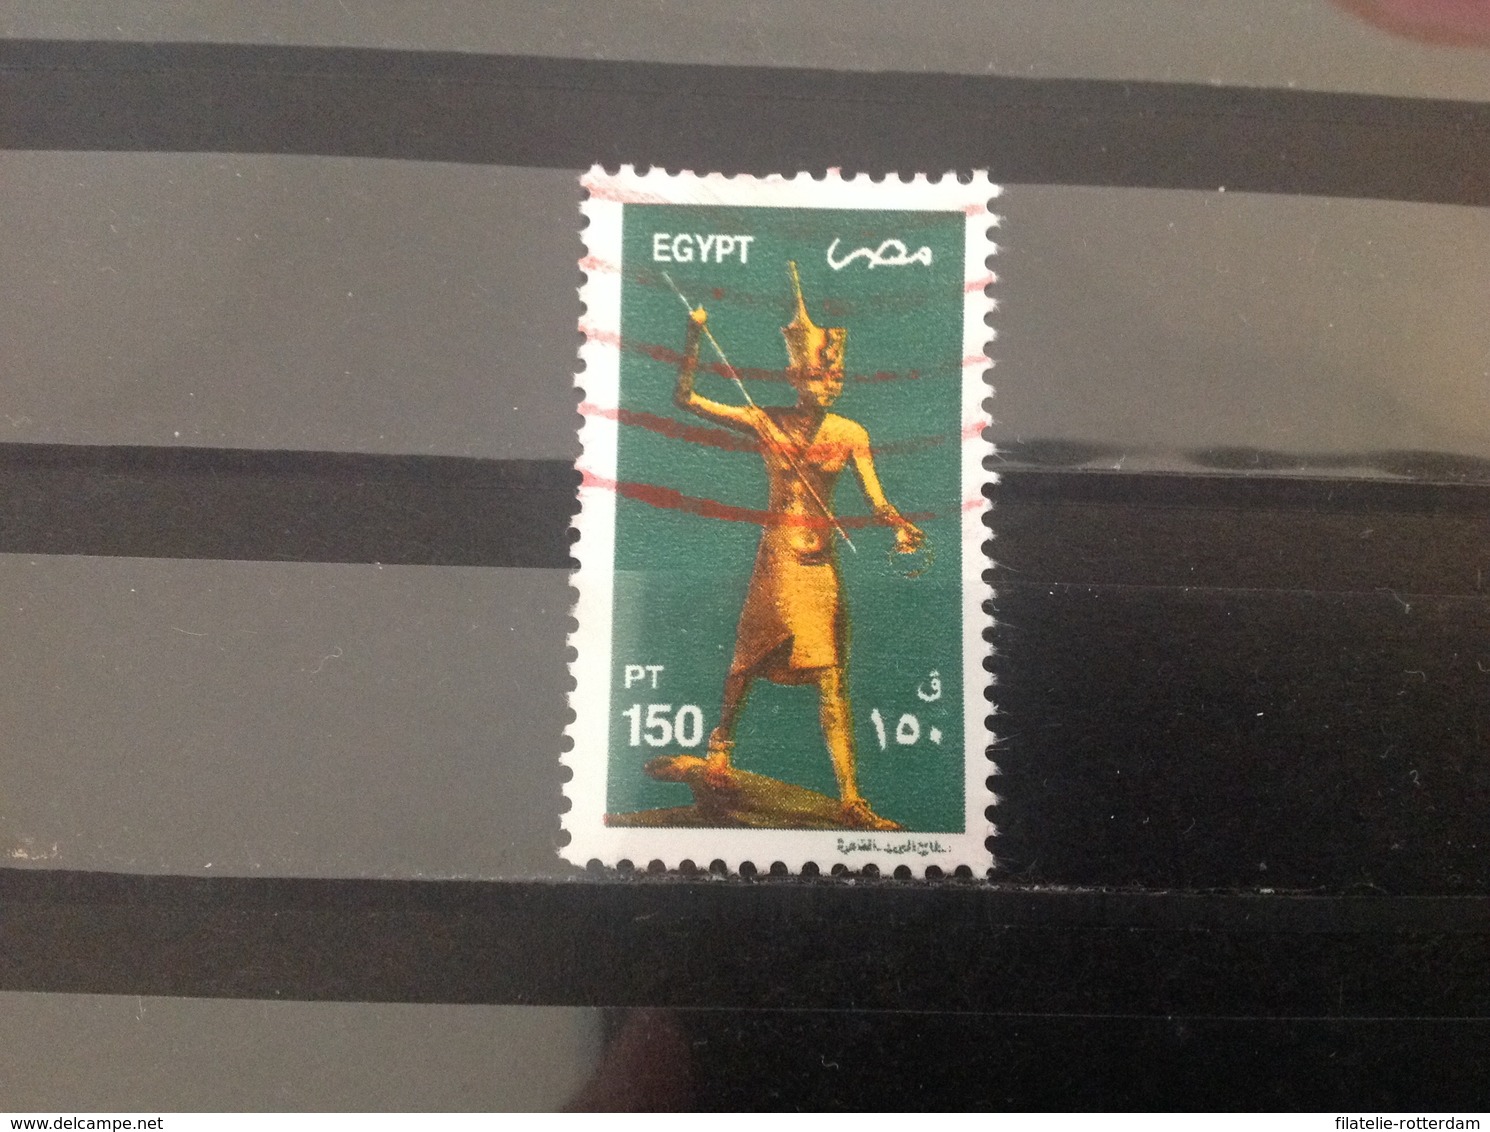 Egypte / Egypt - Toetanchamon (150) 2002 - Used Stamps